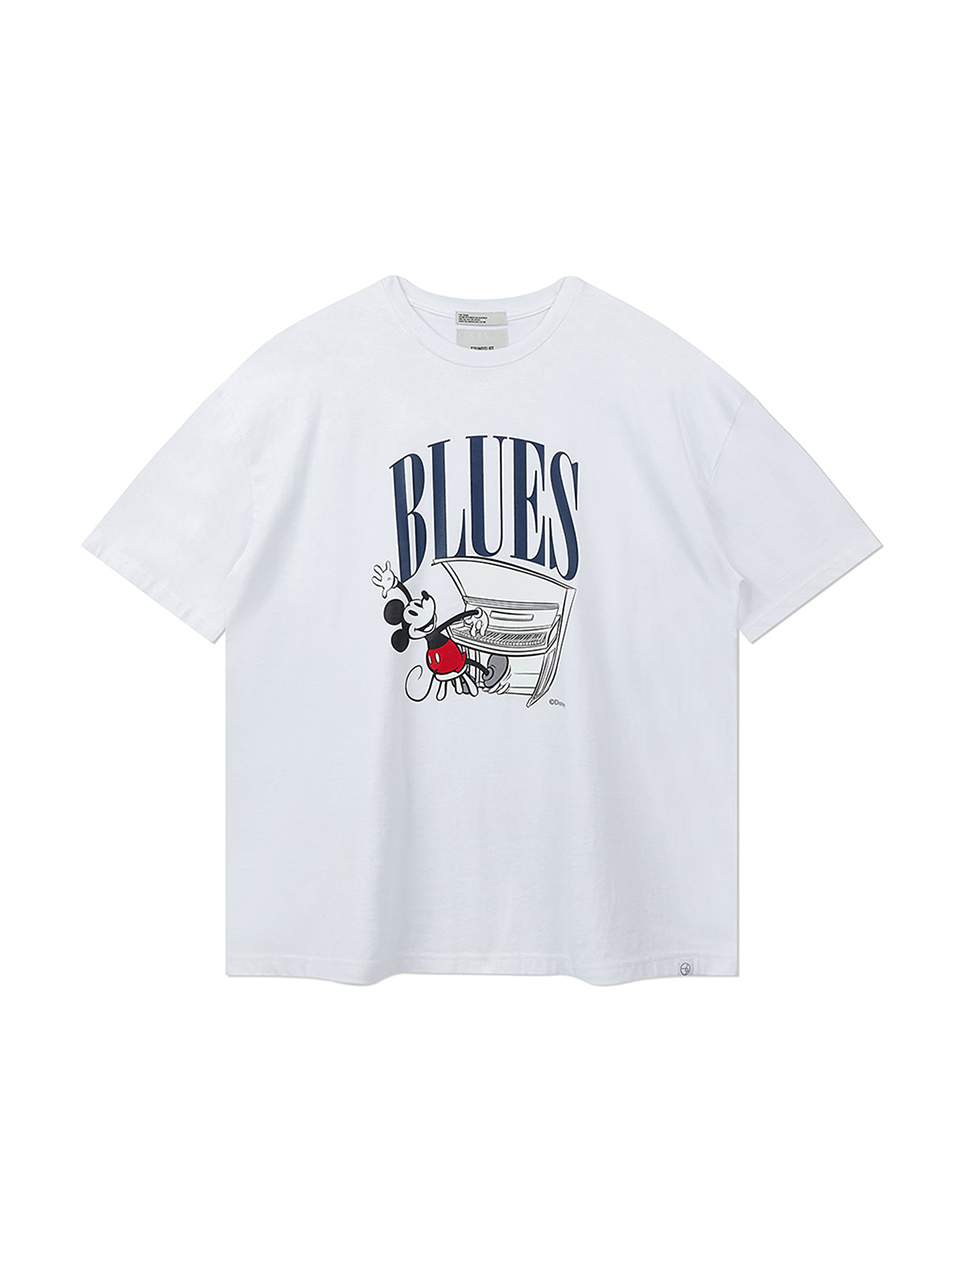 SOUNDSLIFE - Mickey Blues T-Shirt White